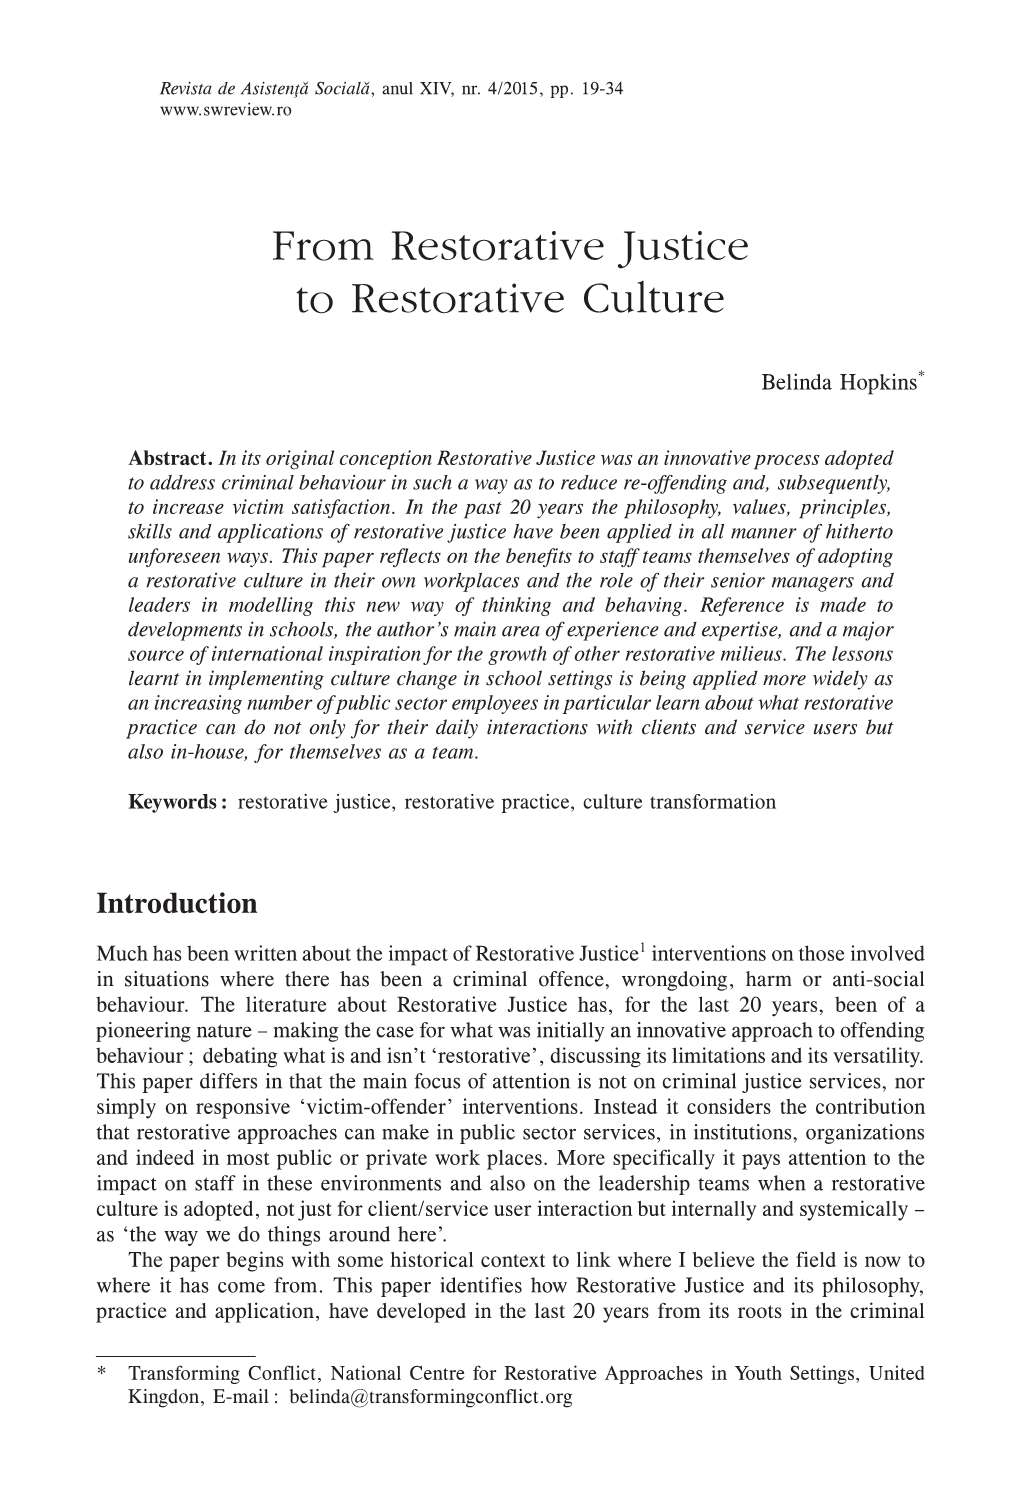 From Restorative Justice to Restorative Culture